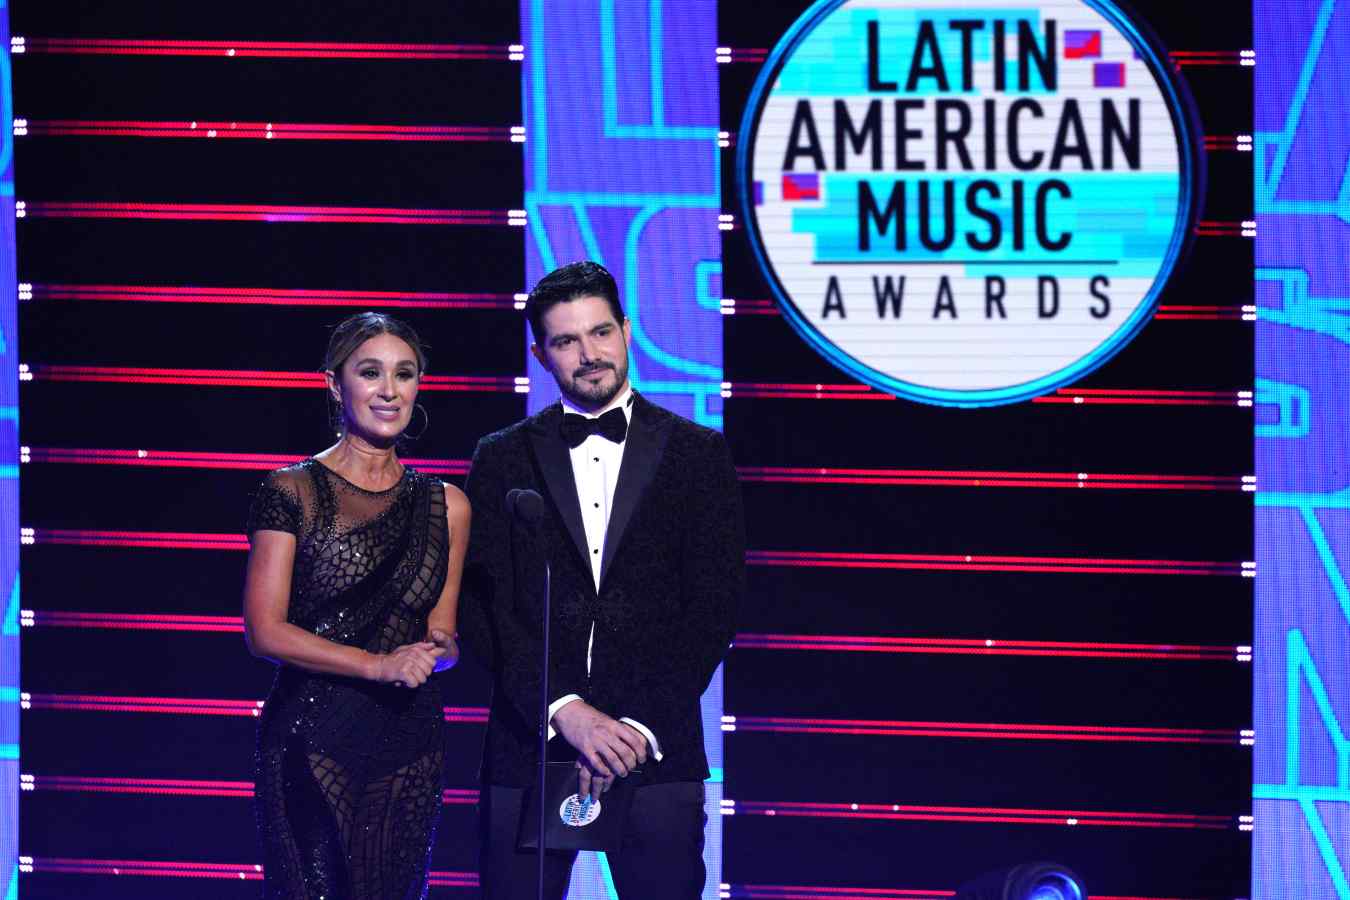 LIVE STREAM Los Latin American Music Awards 2022 en vivo